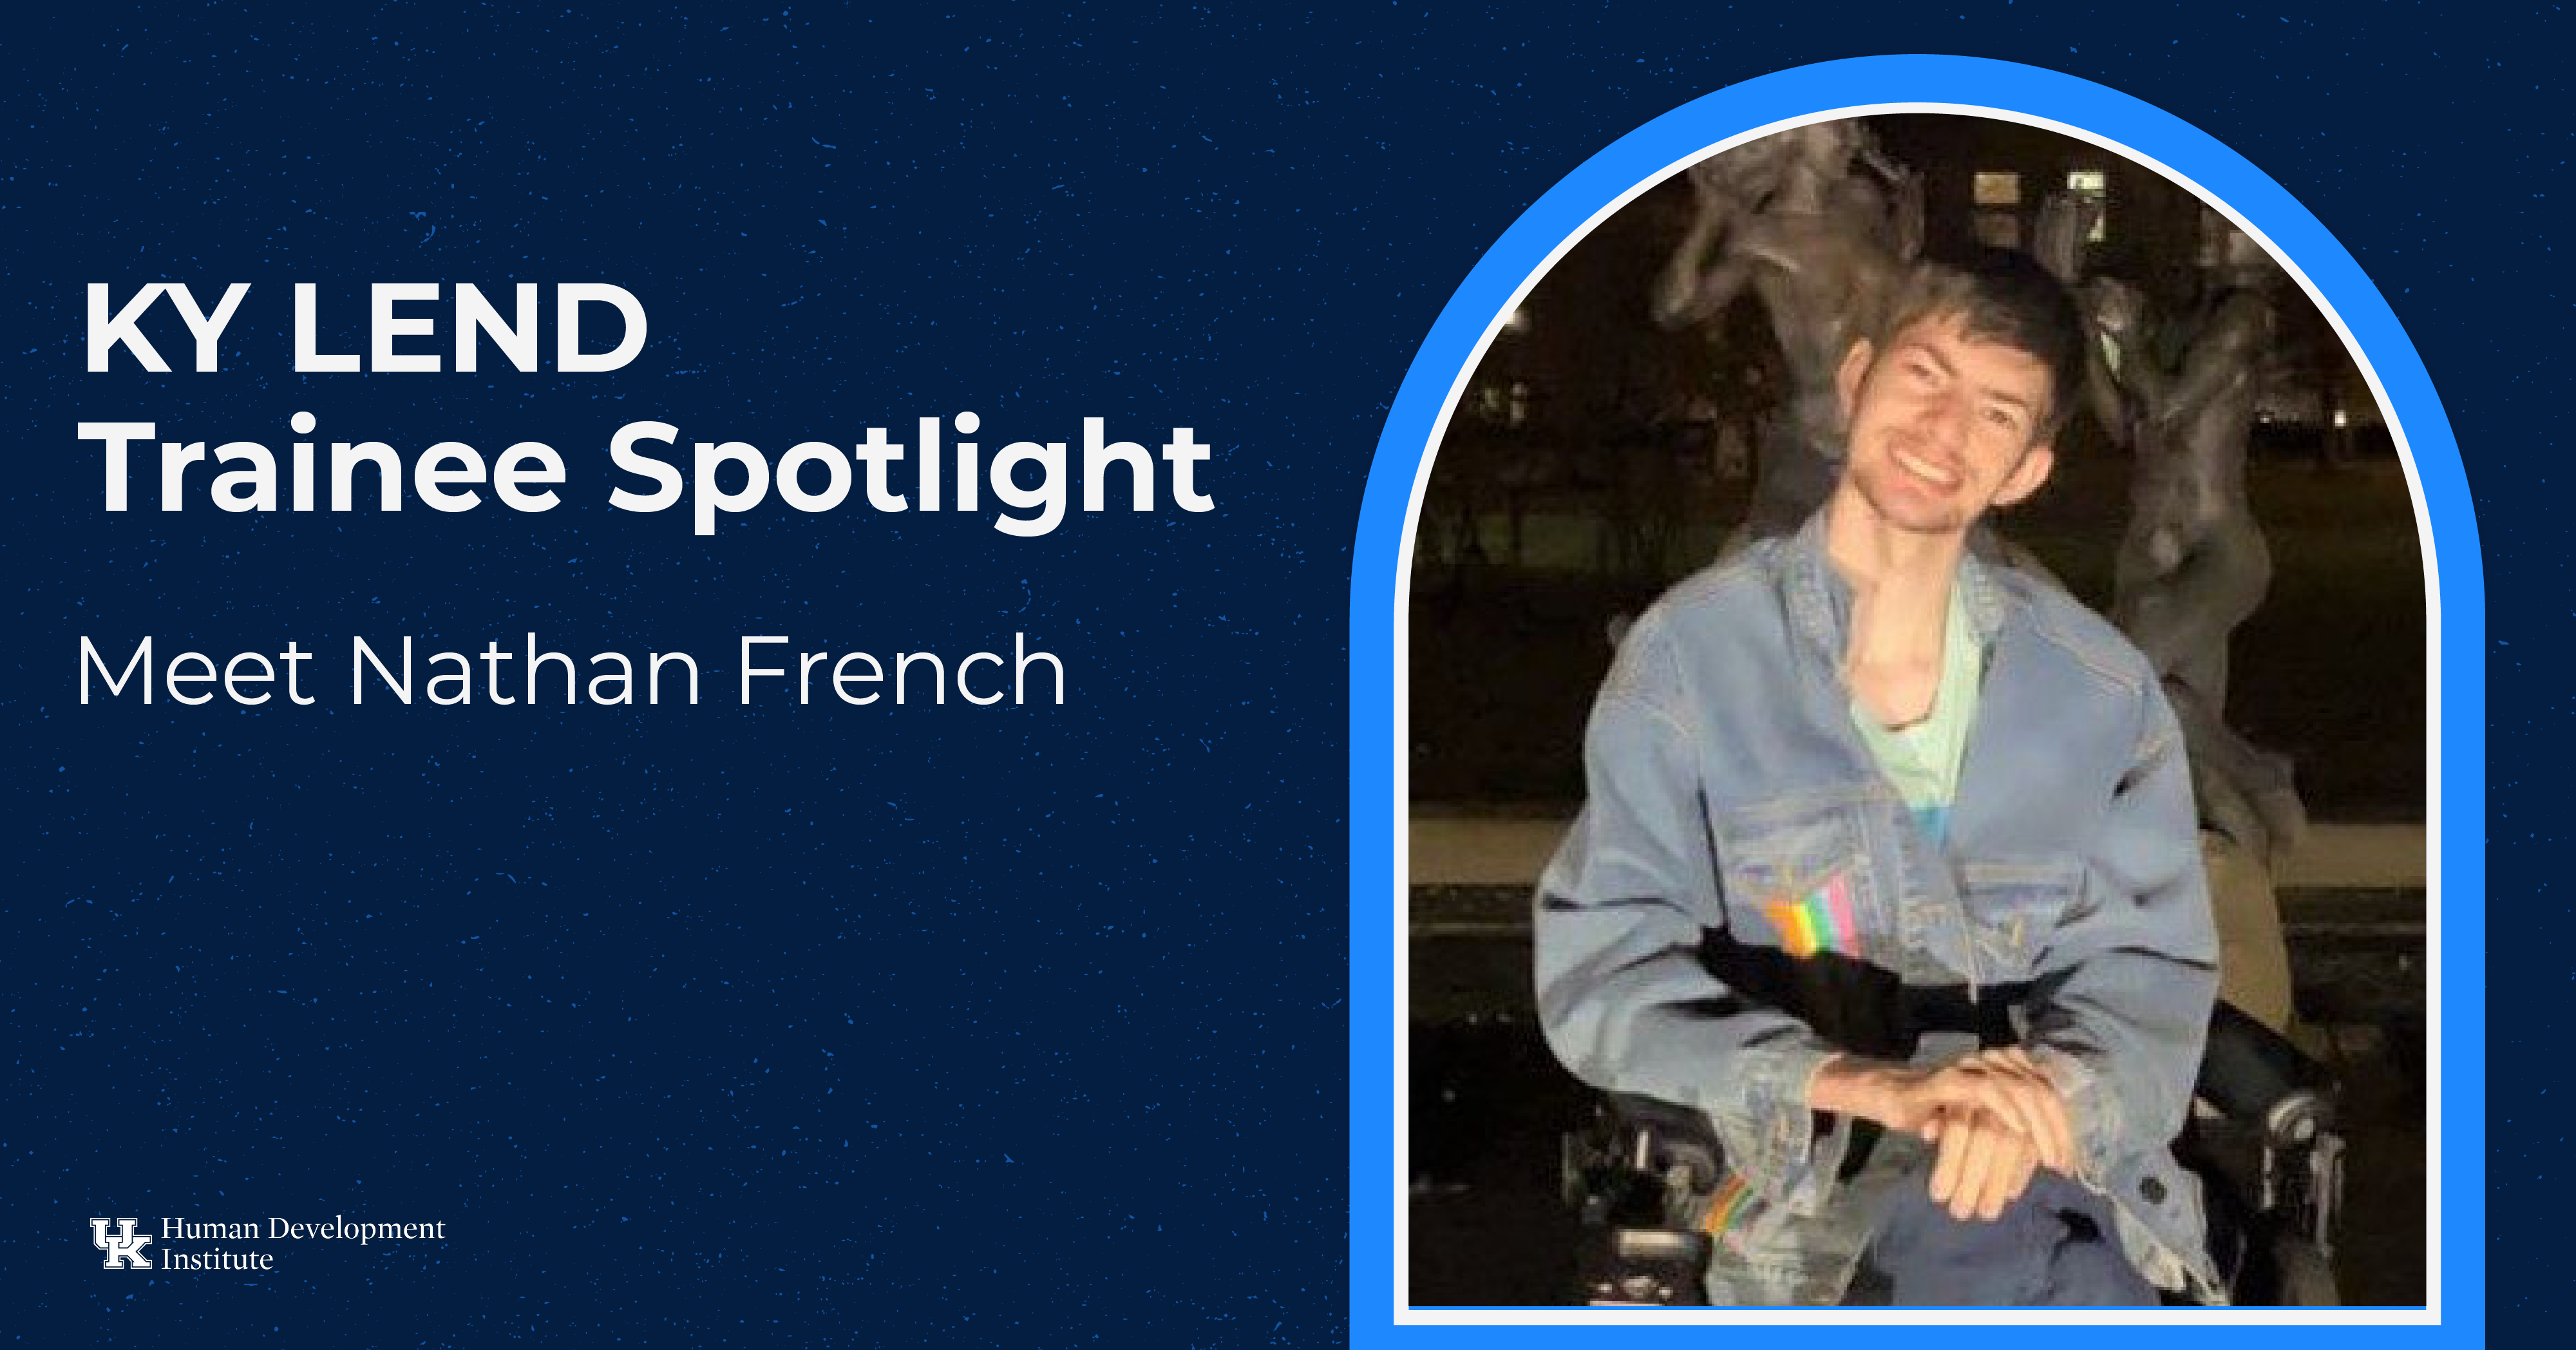 KY LEND Trainee Spotlight: Meet Nathan French